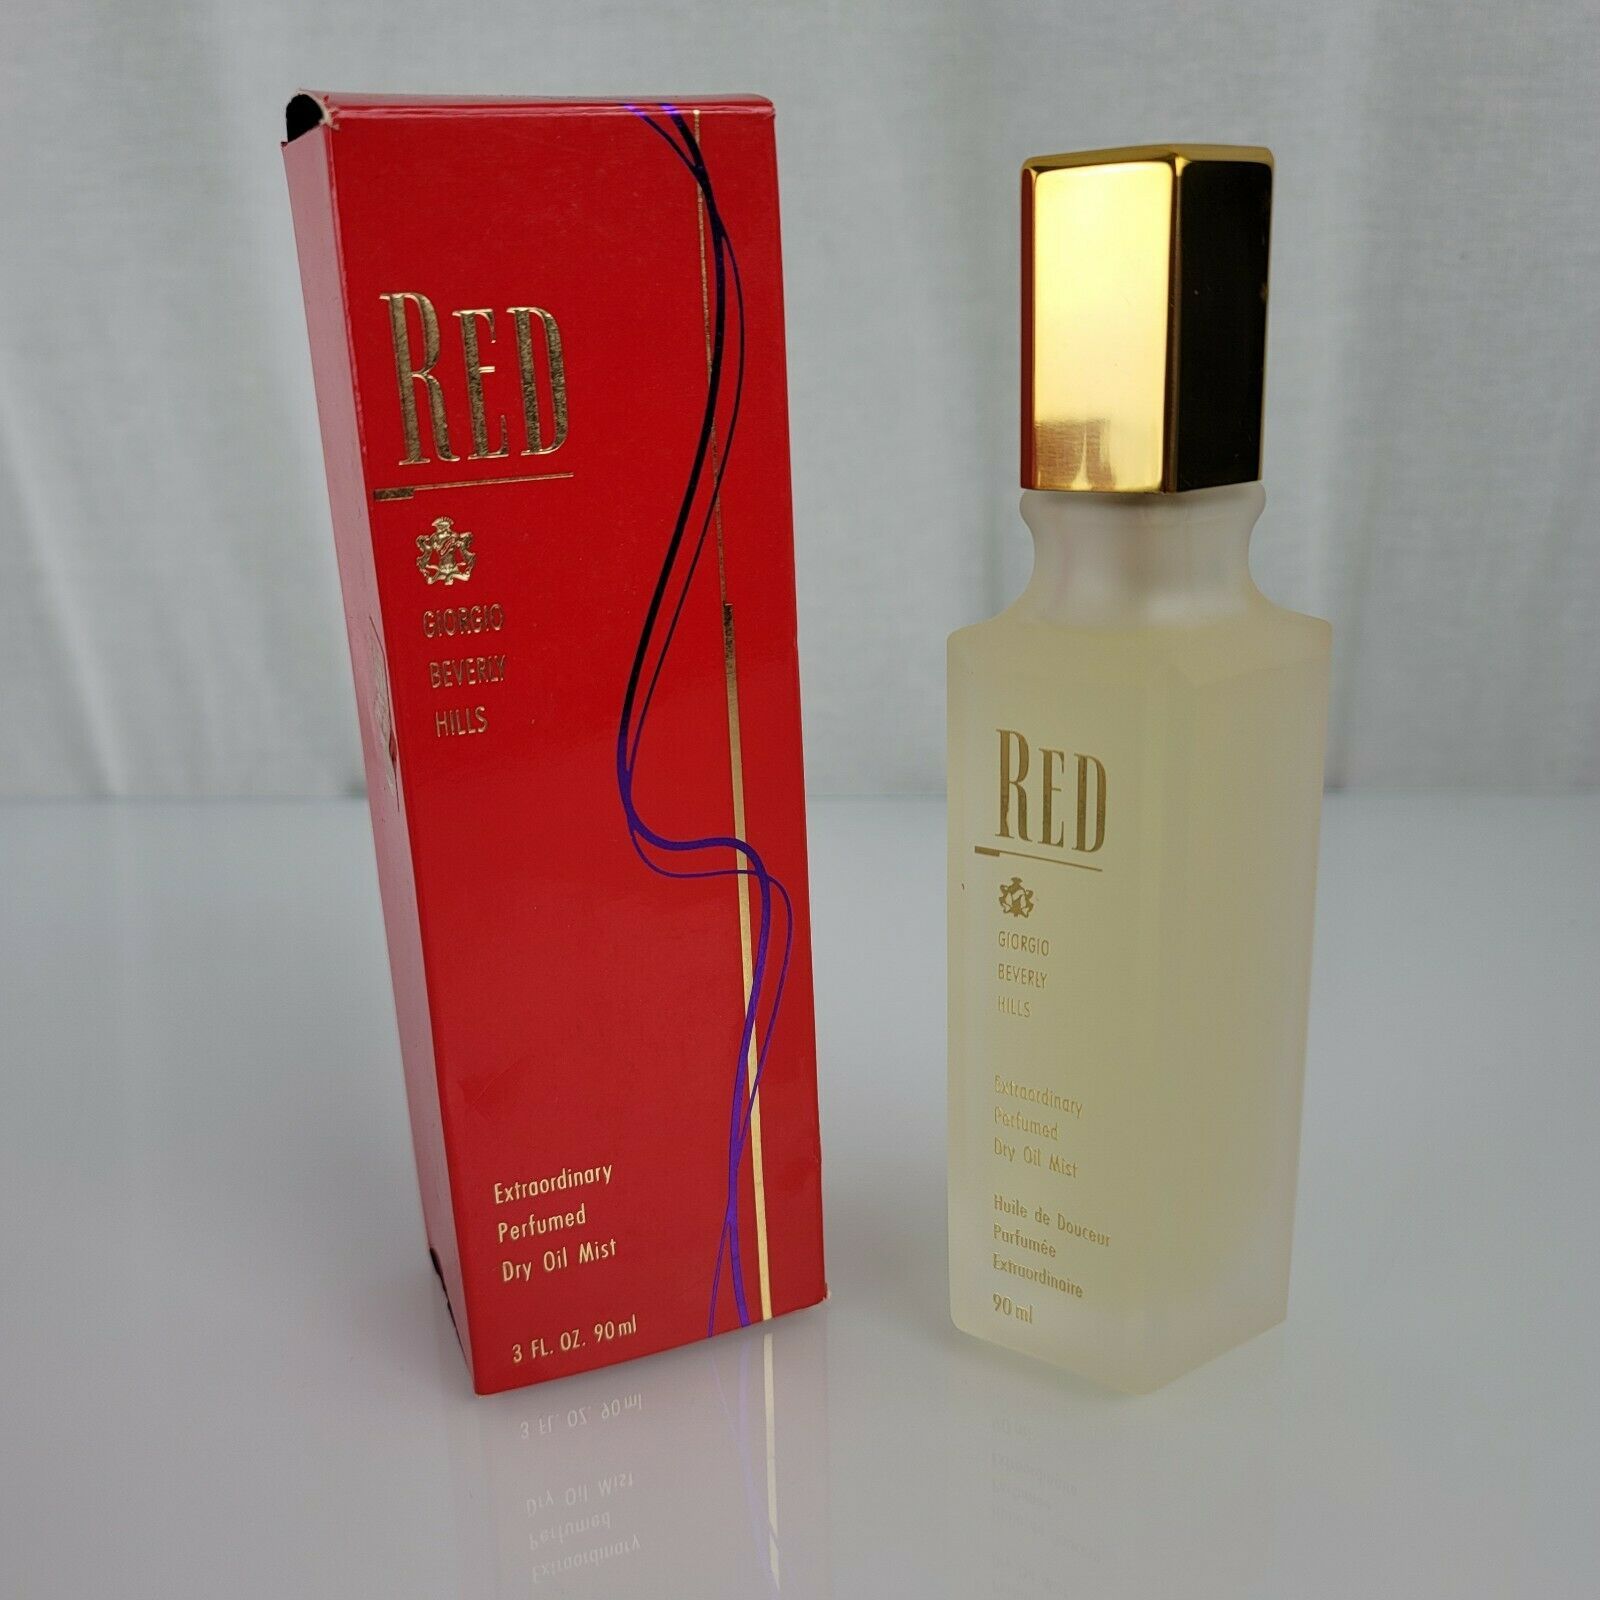 Red Giorgio Beverly Hills Extraordinary Perfumed Dry Oil Mist 3 oz Vintage 1988 - $197.99